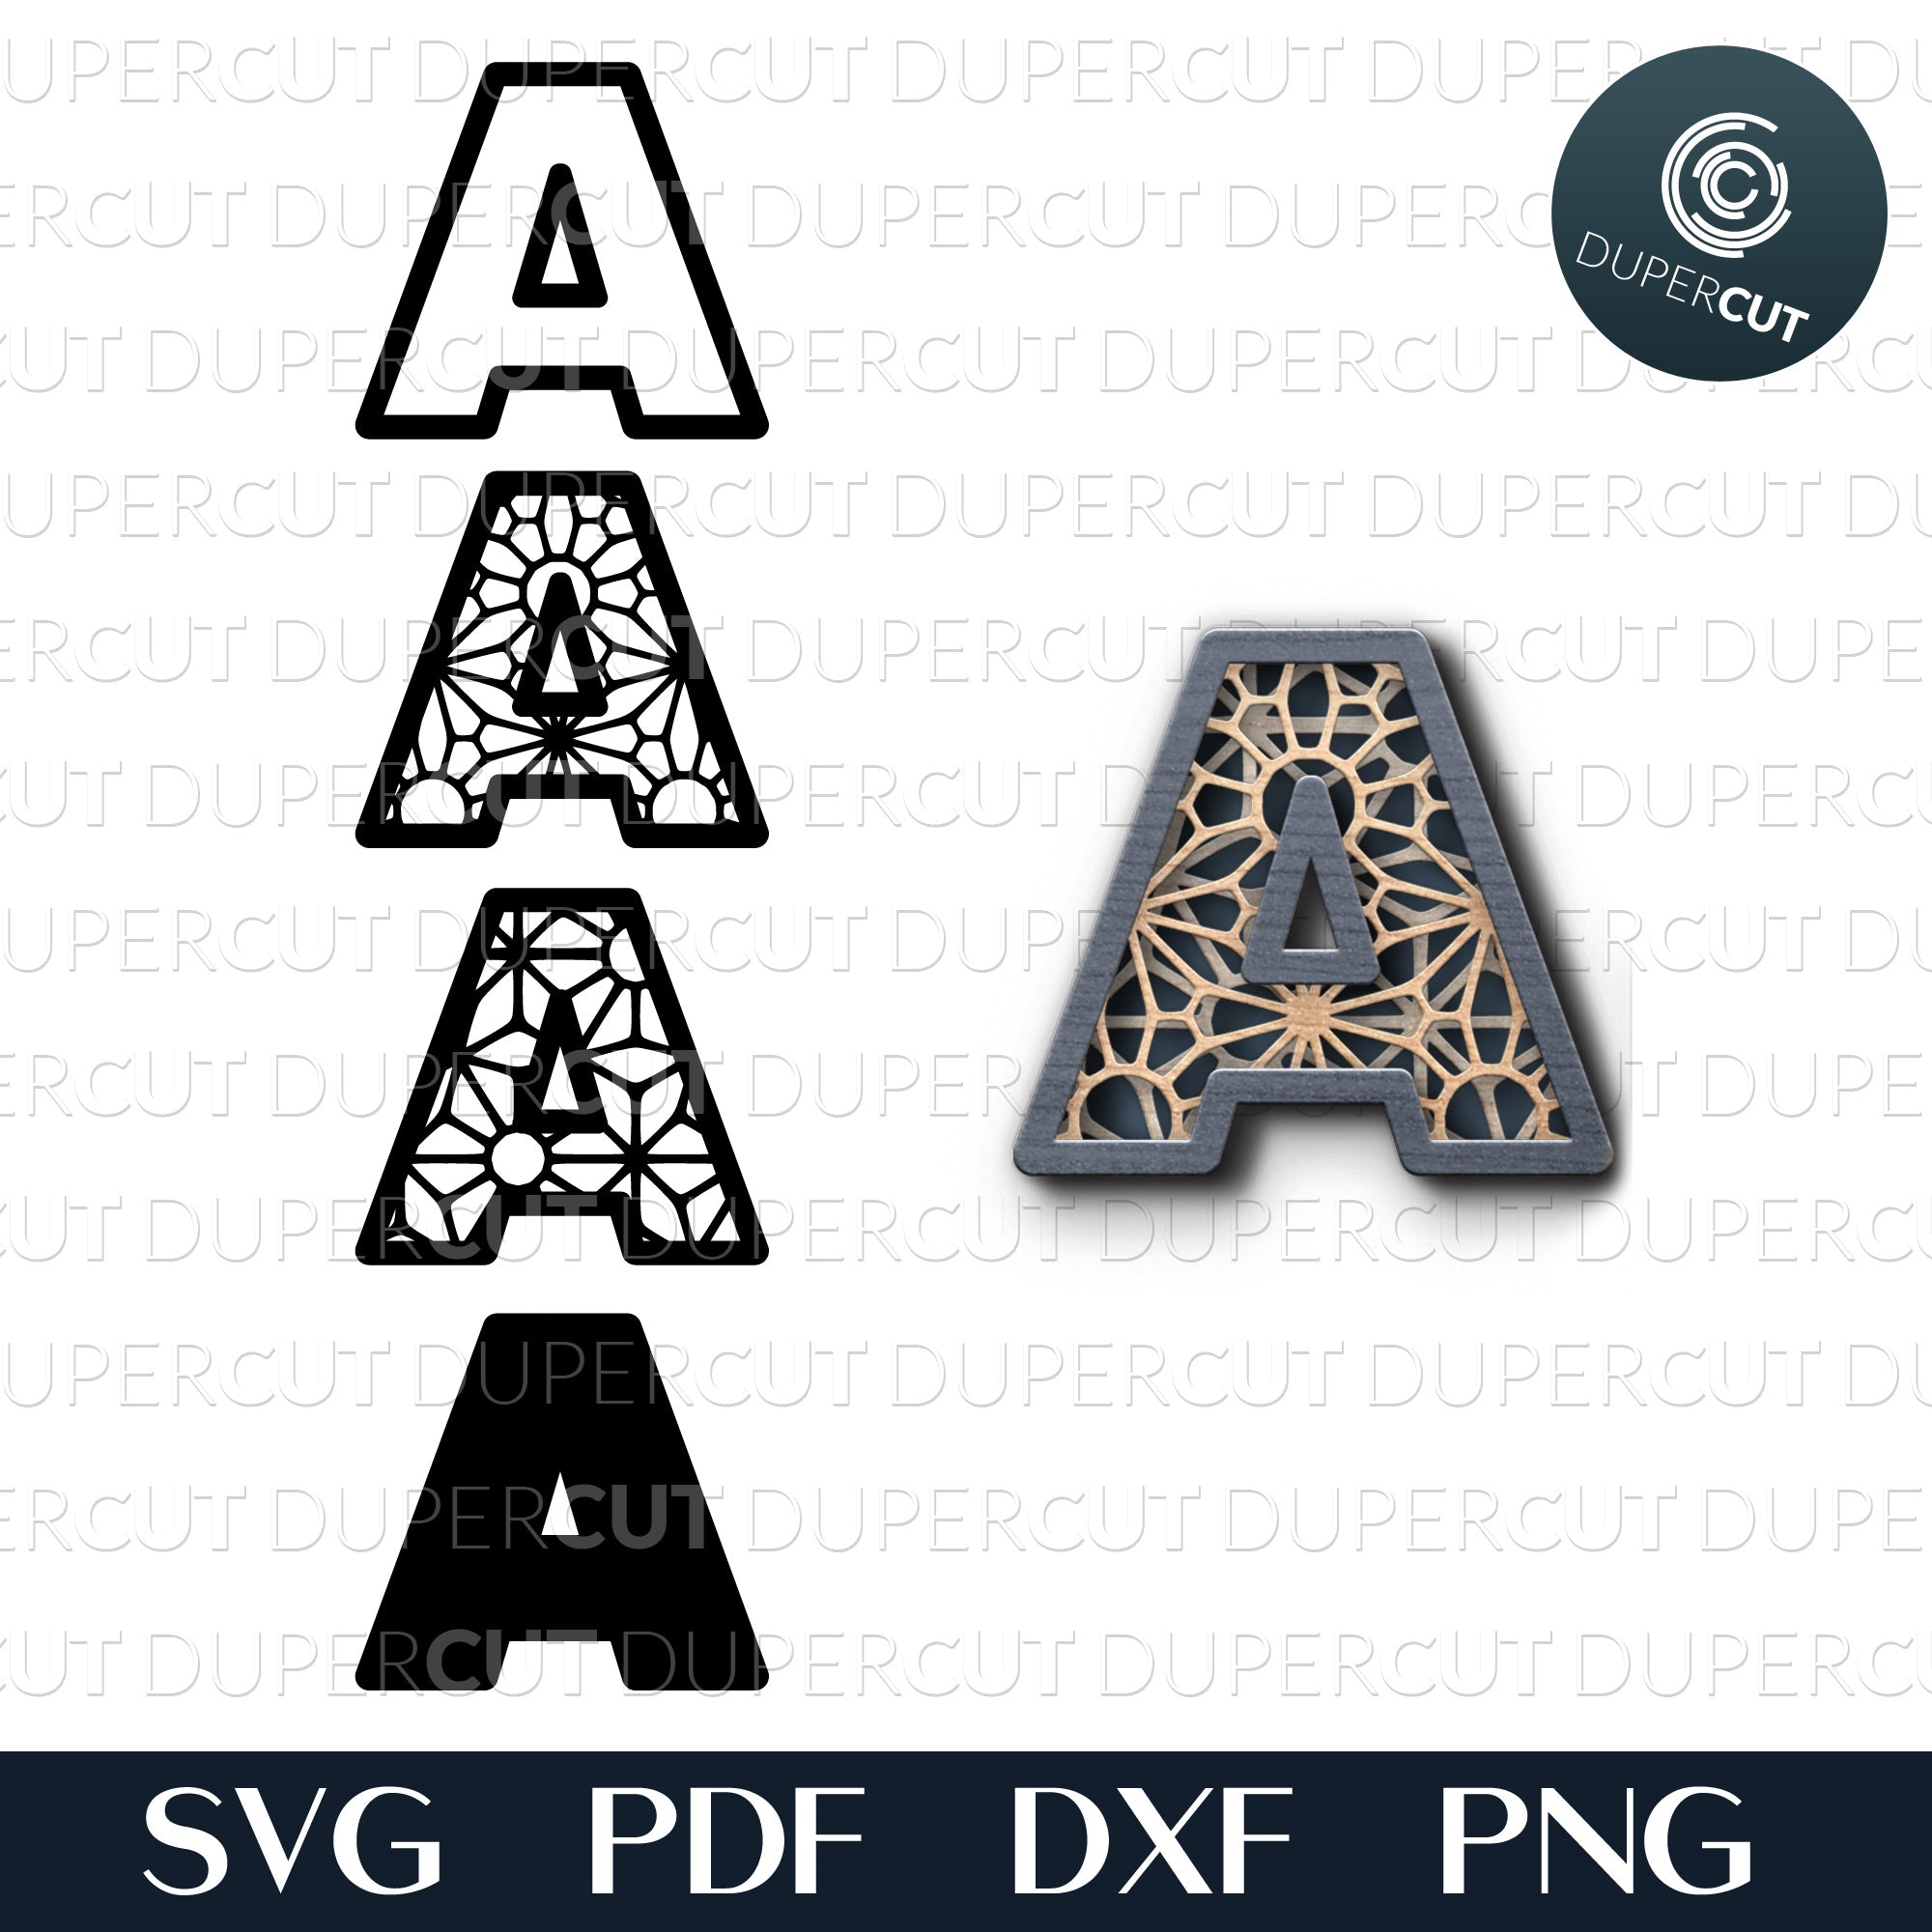 Download 26 Alphabet Letters Layered Svg Pdf Dxf Dupercut